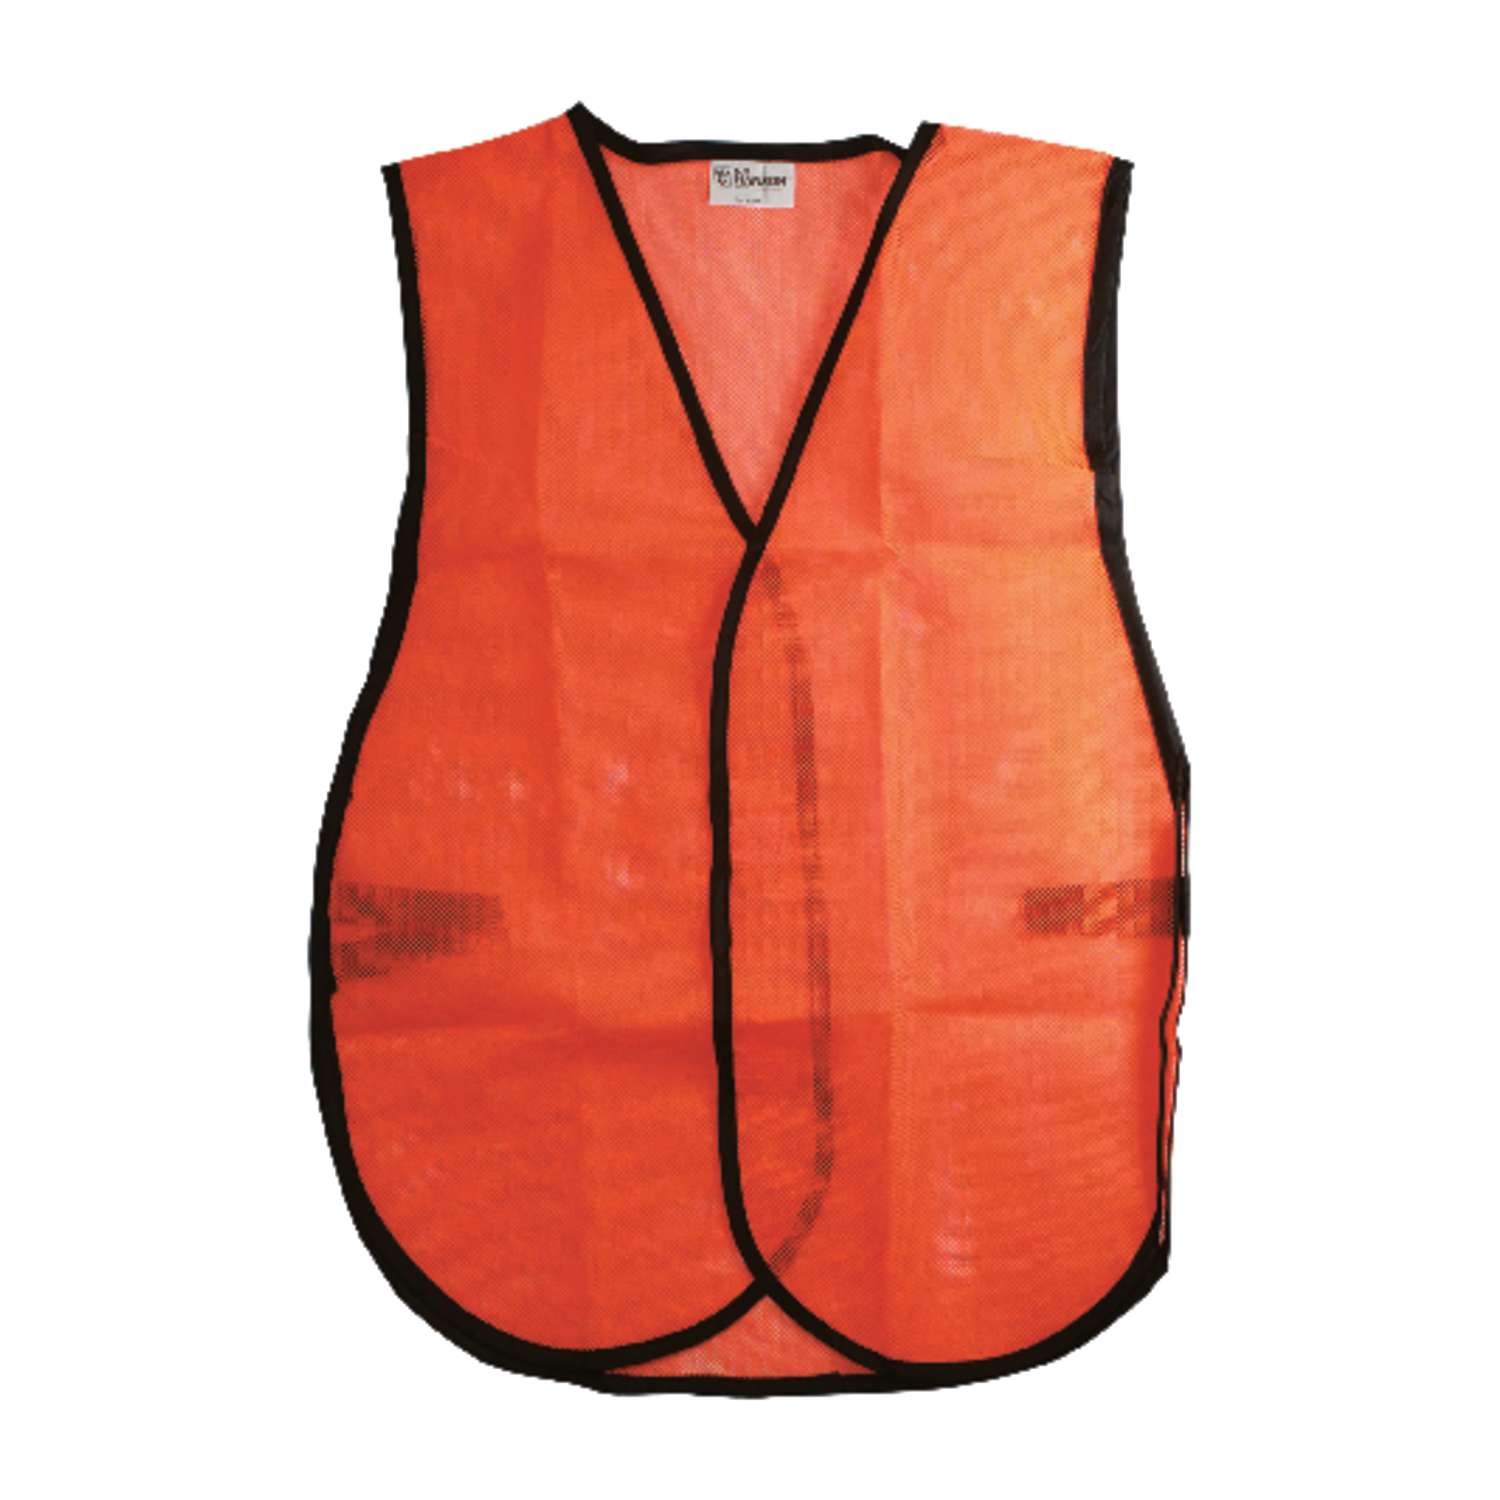 C.H. Hanson Reflective Polyester Mesh Safety Vest Orange